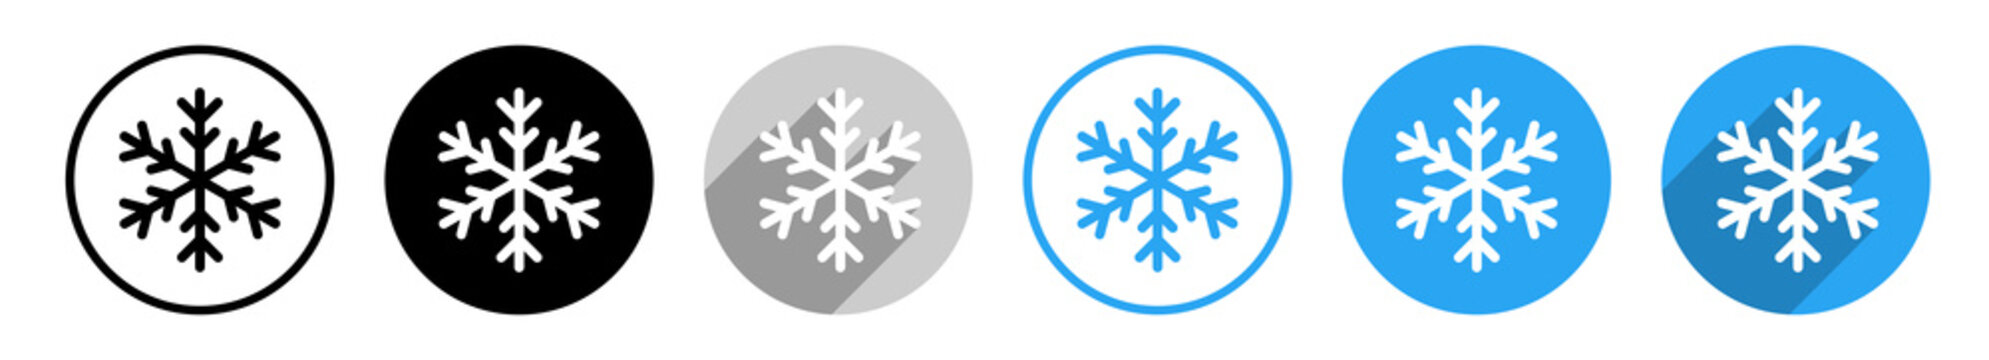 Eis / Schneeflocke Vektor Icons